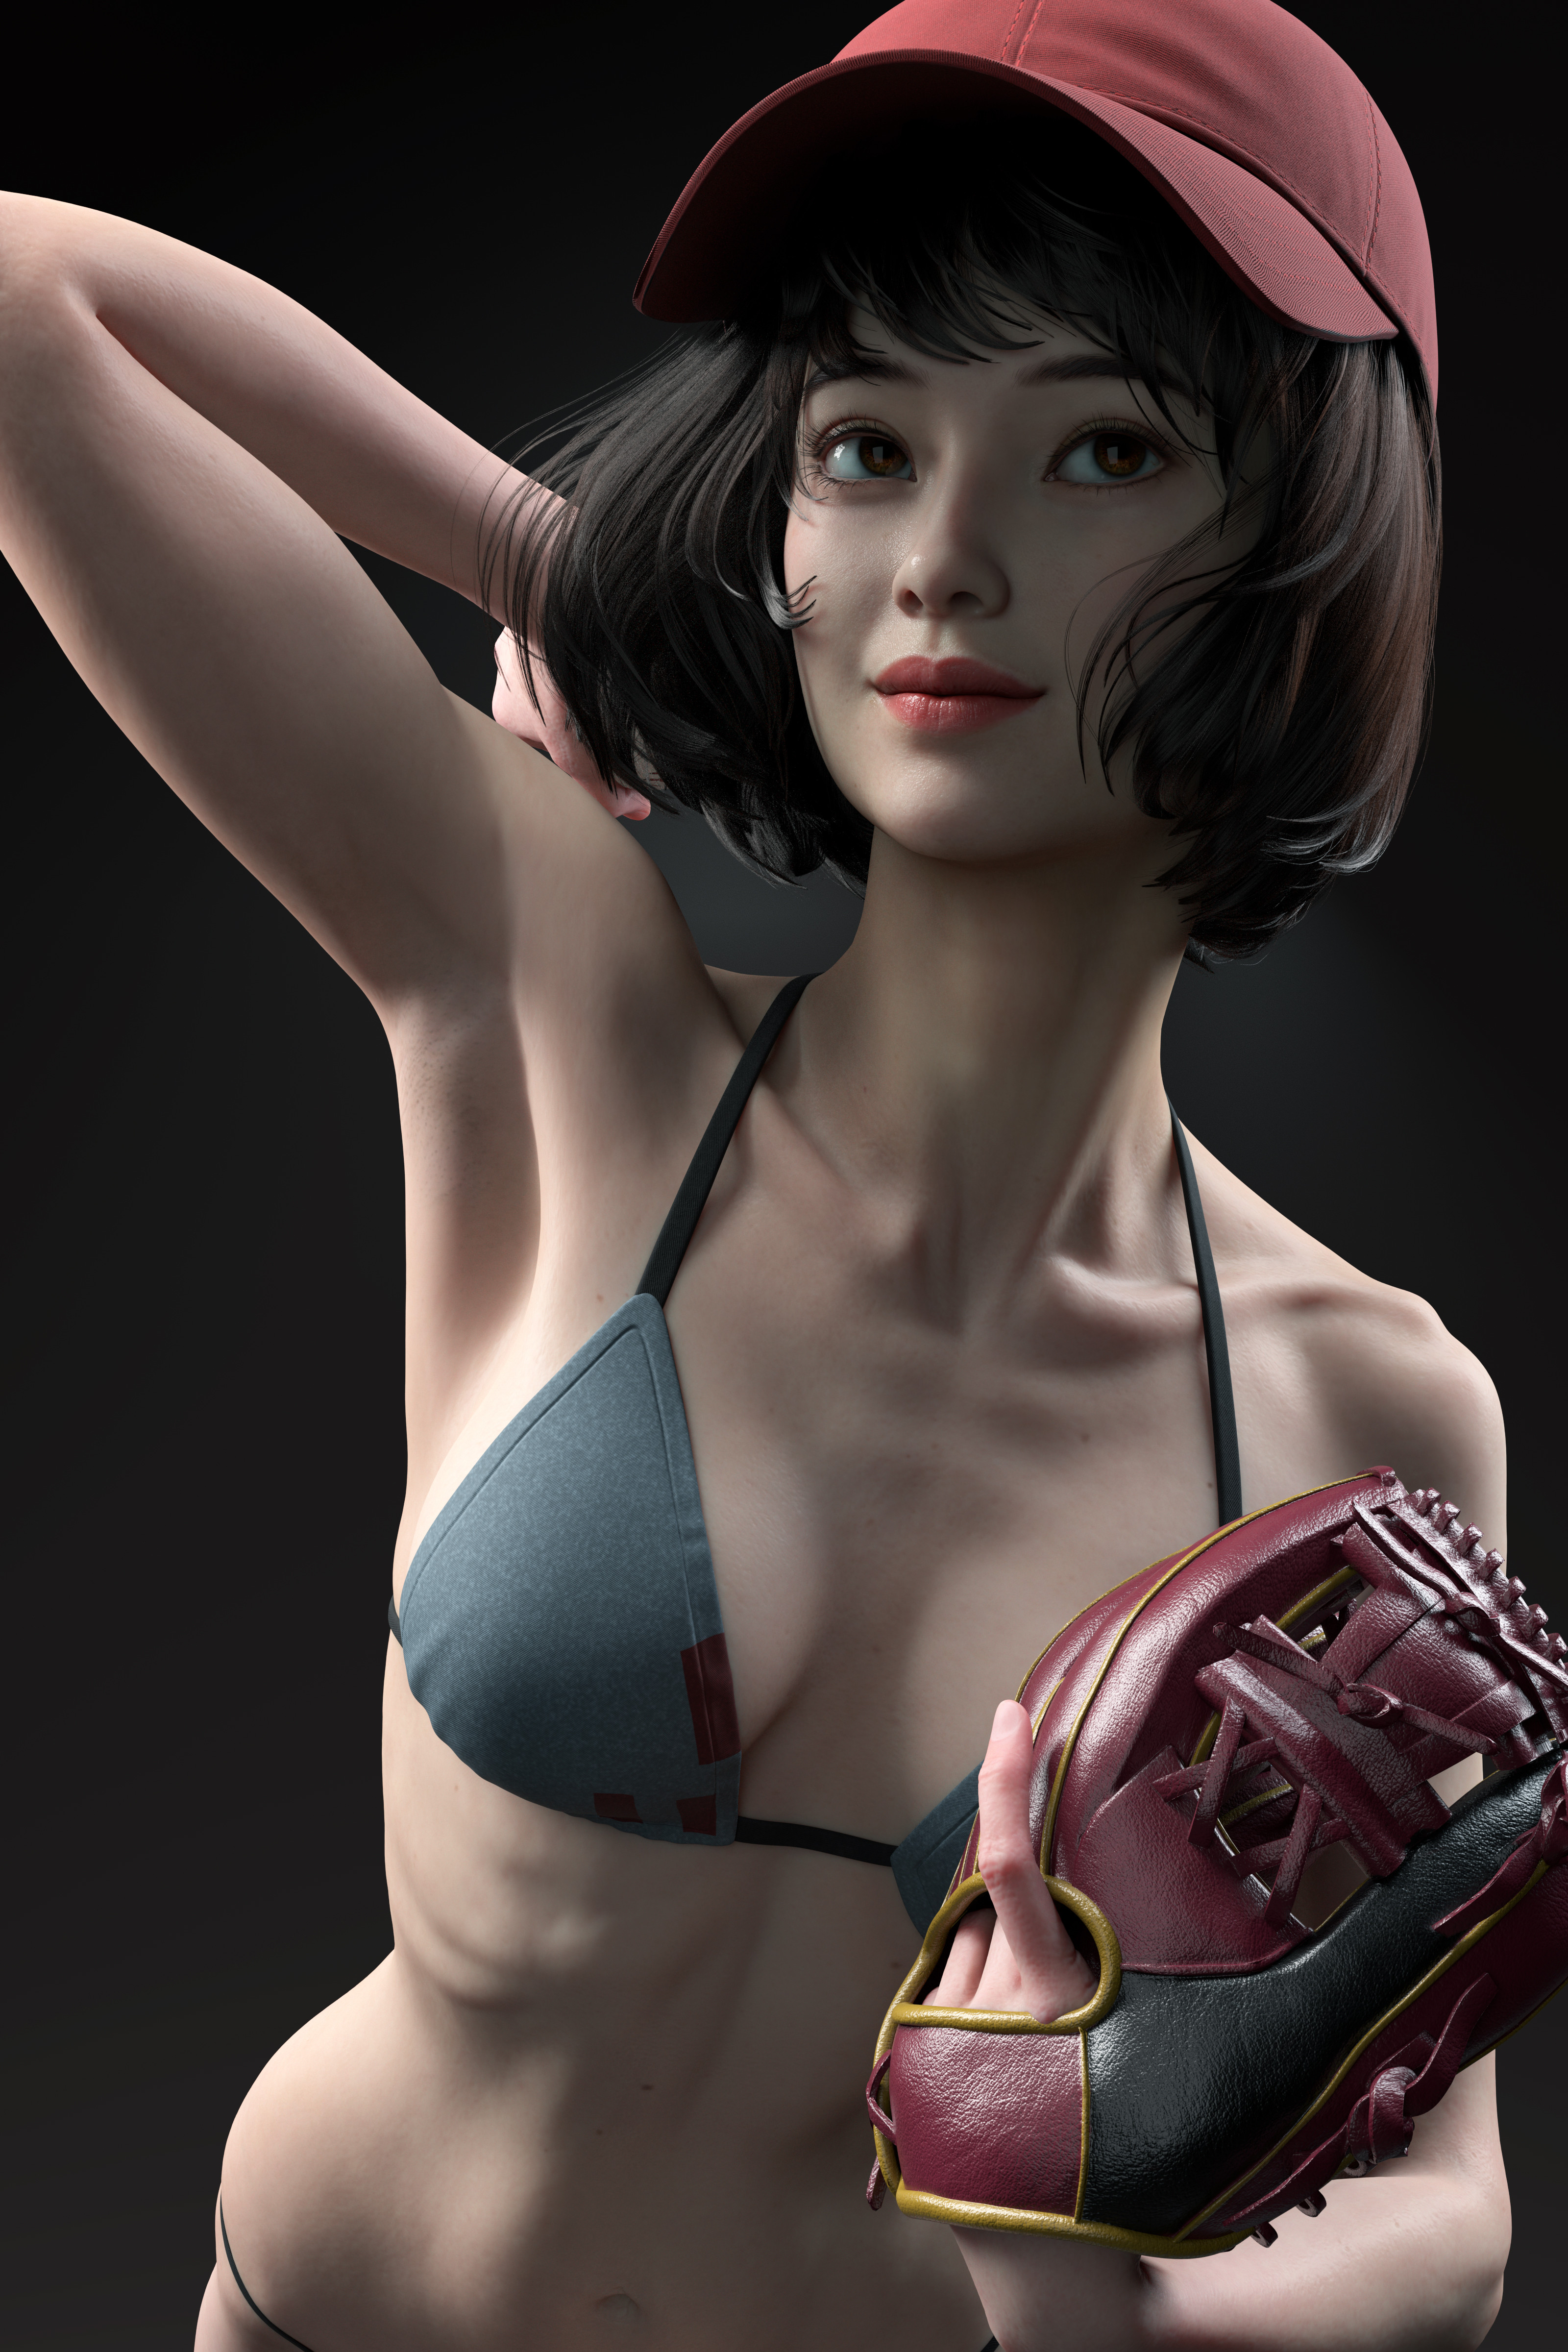 General 3200x4800 Qi Sheng Luo CGI women baseball cap bikini sportswear portrait display baseball glove armpits hat